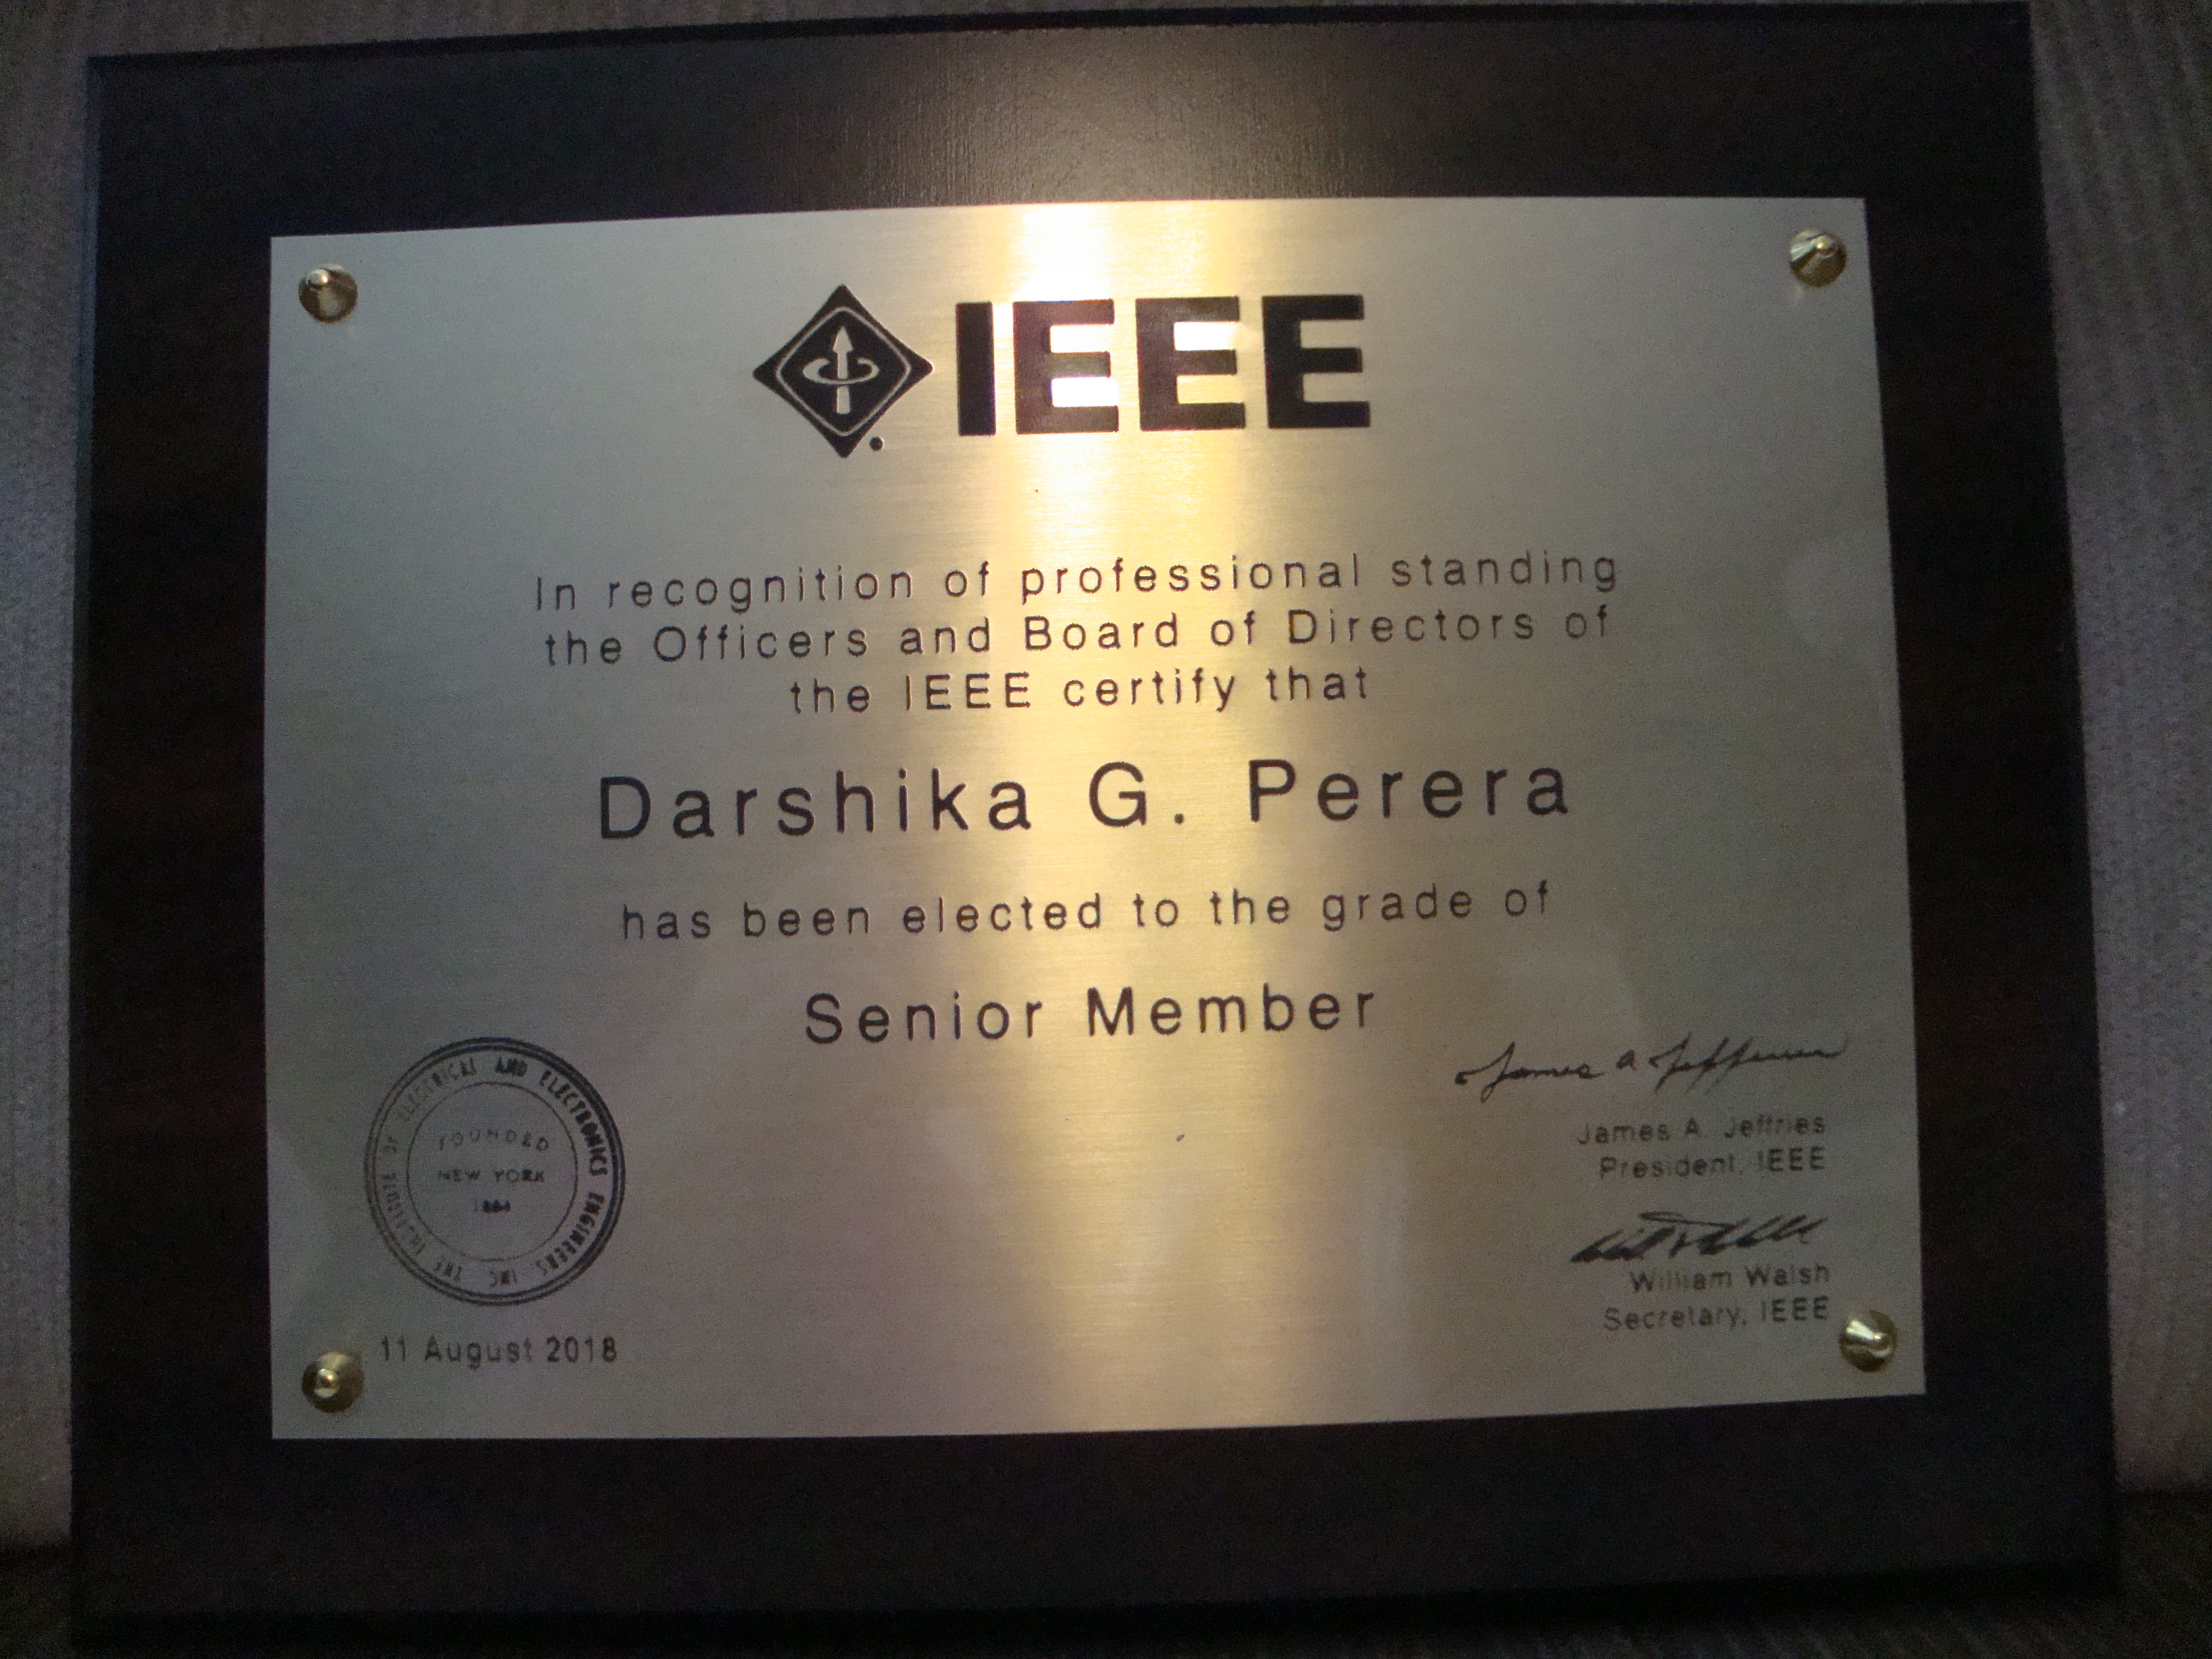 IEEE Senior Member, October 2018